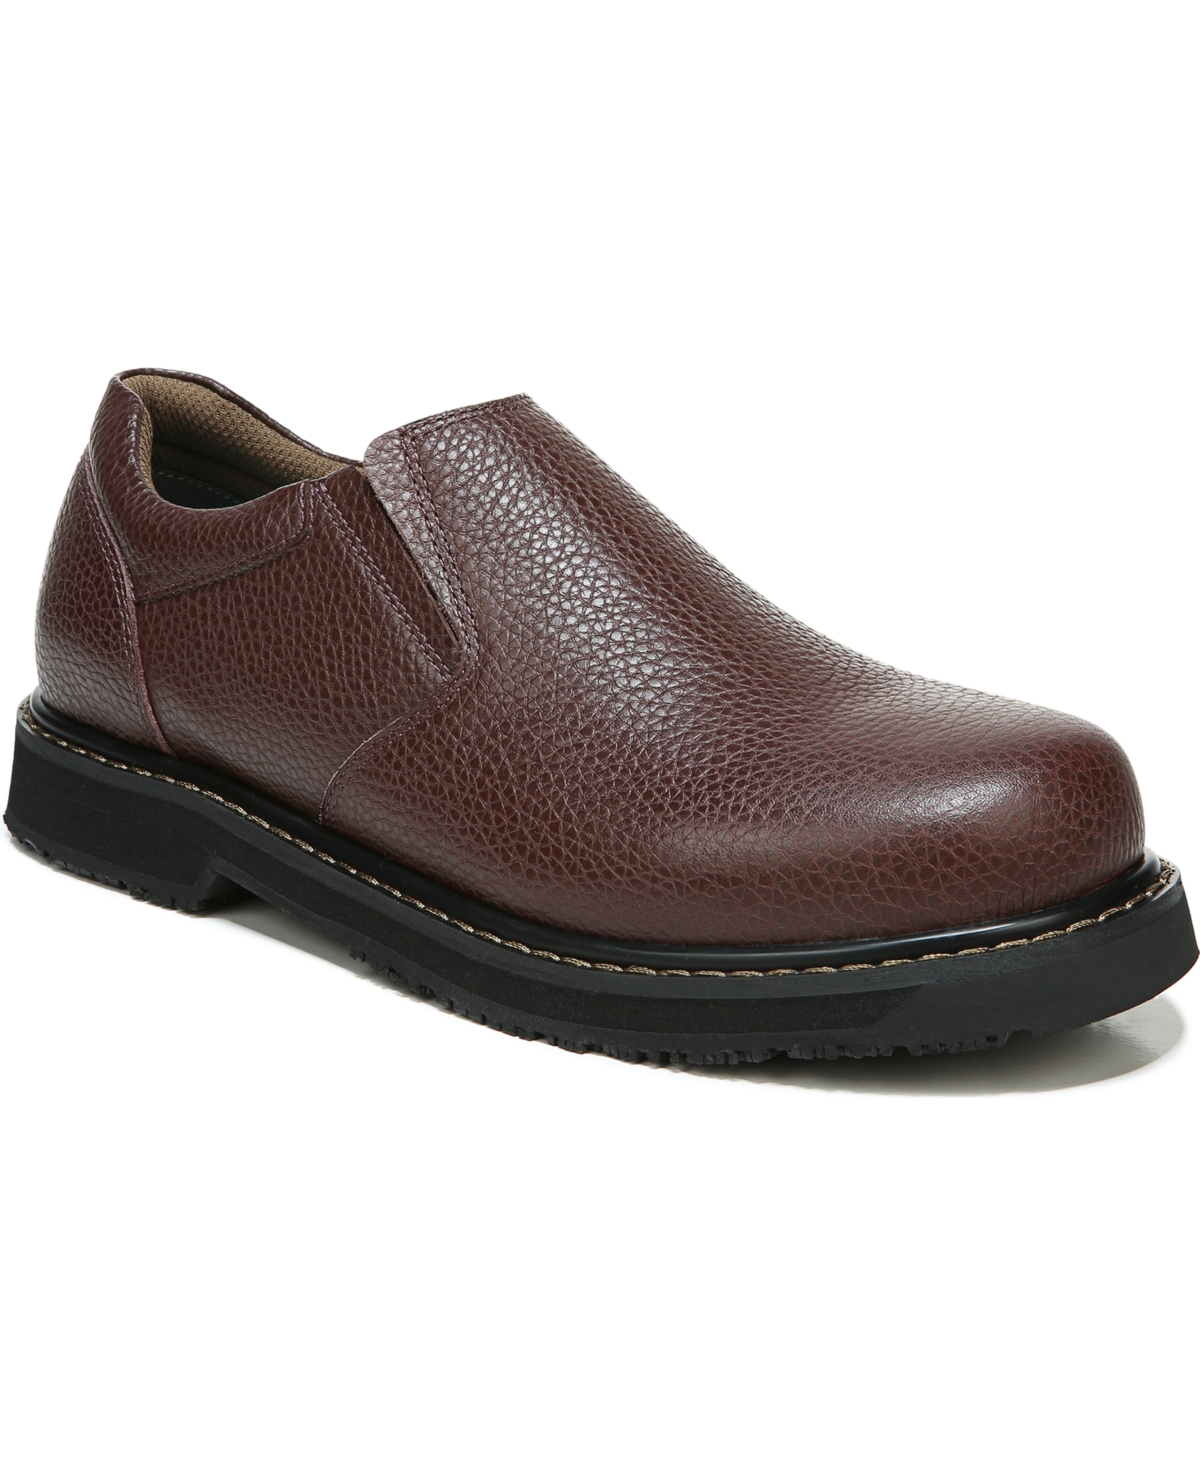 Men's Winder Ii Oil & Slip Resistant Slip-On Loafers - Brown